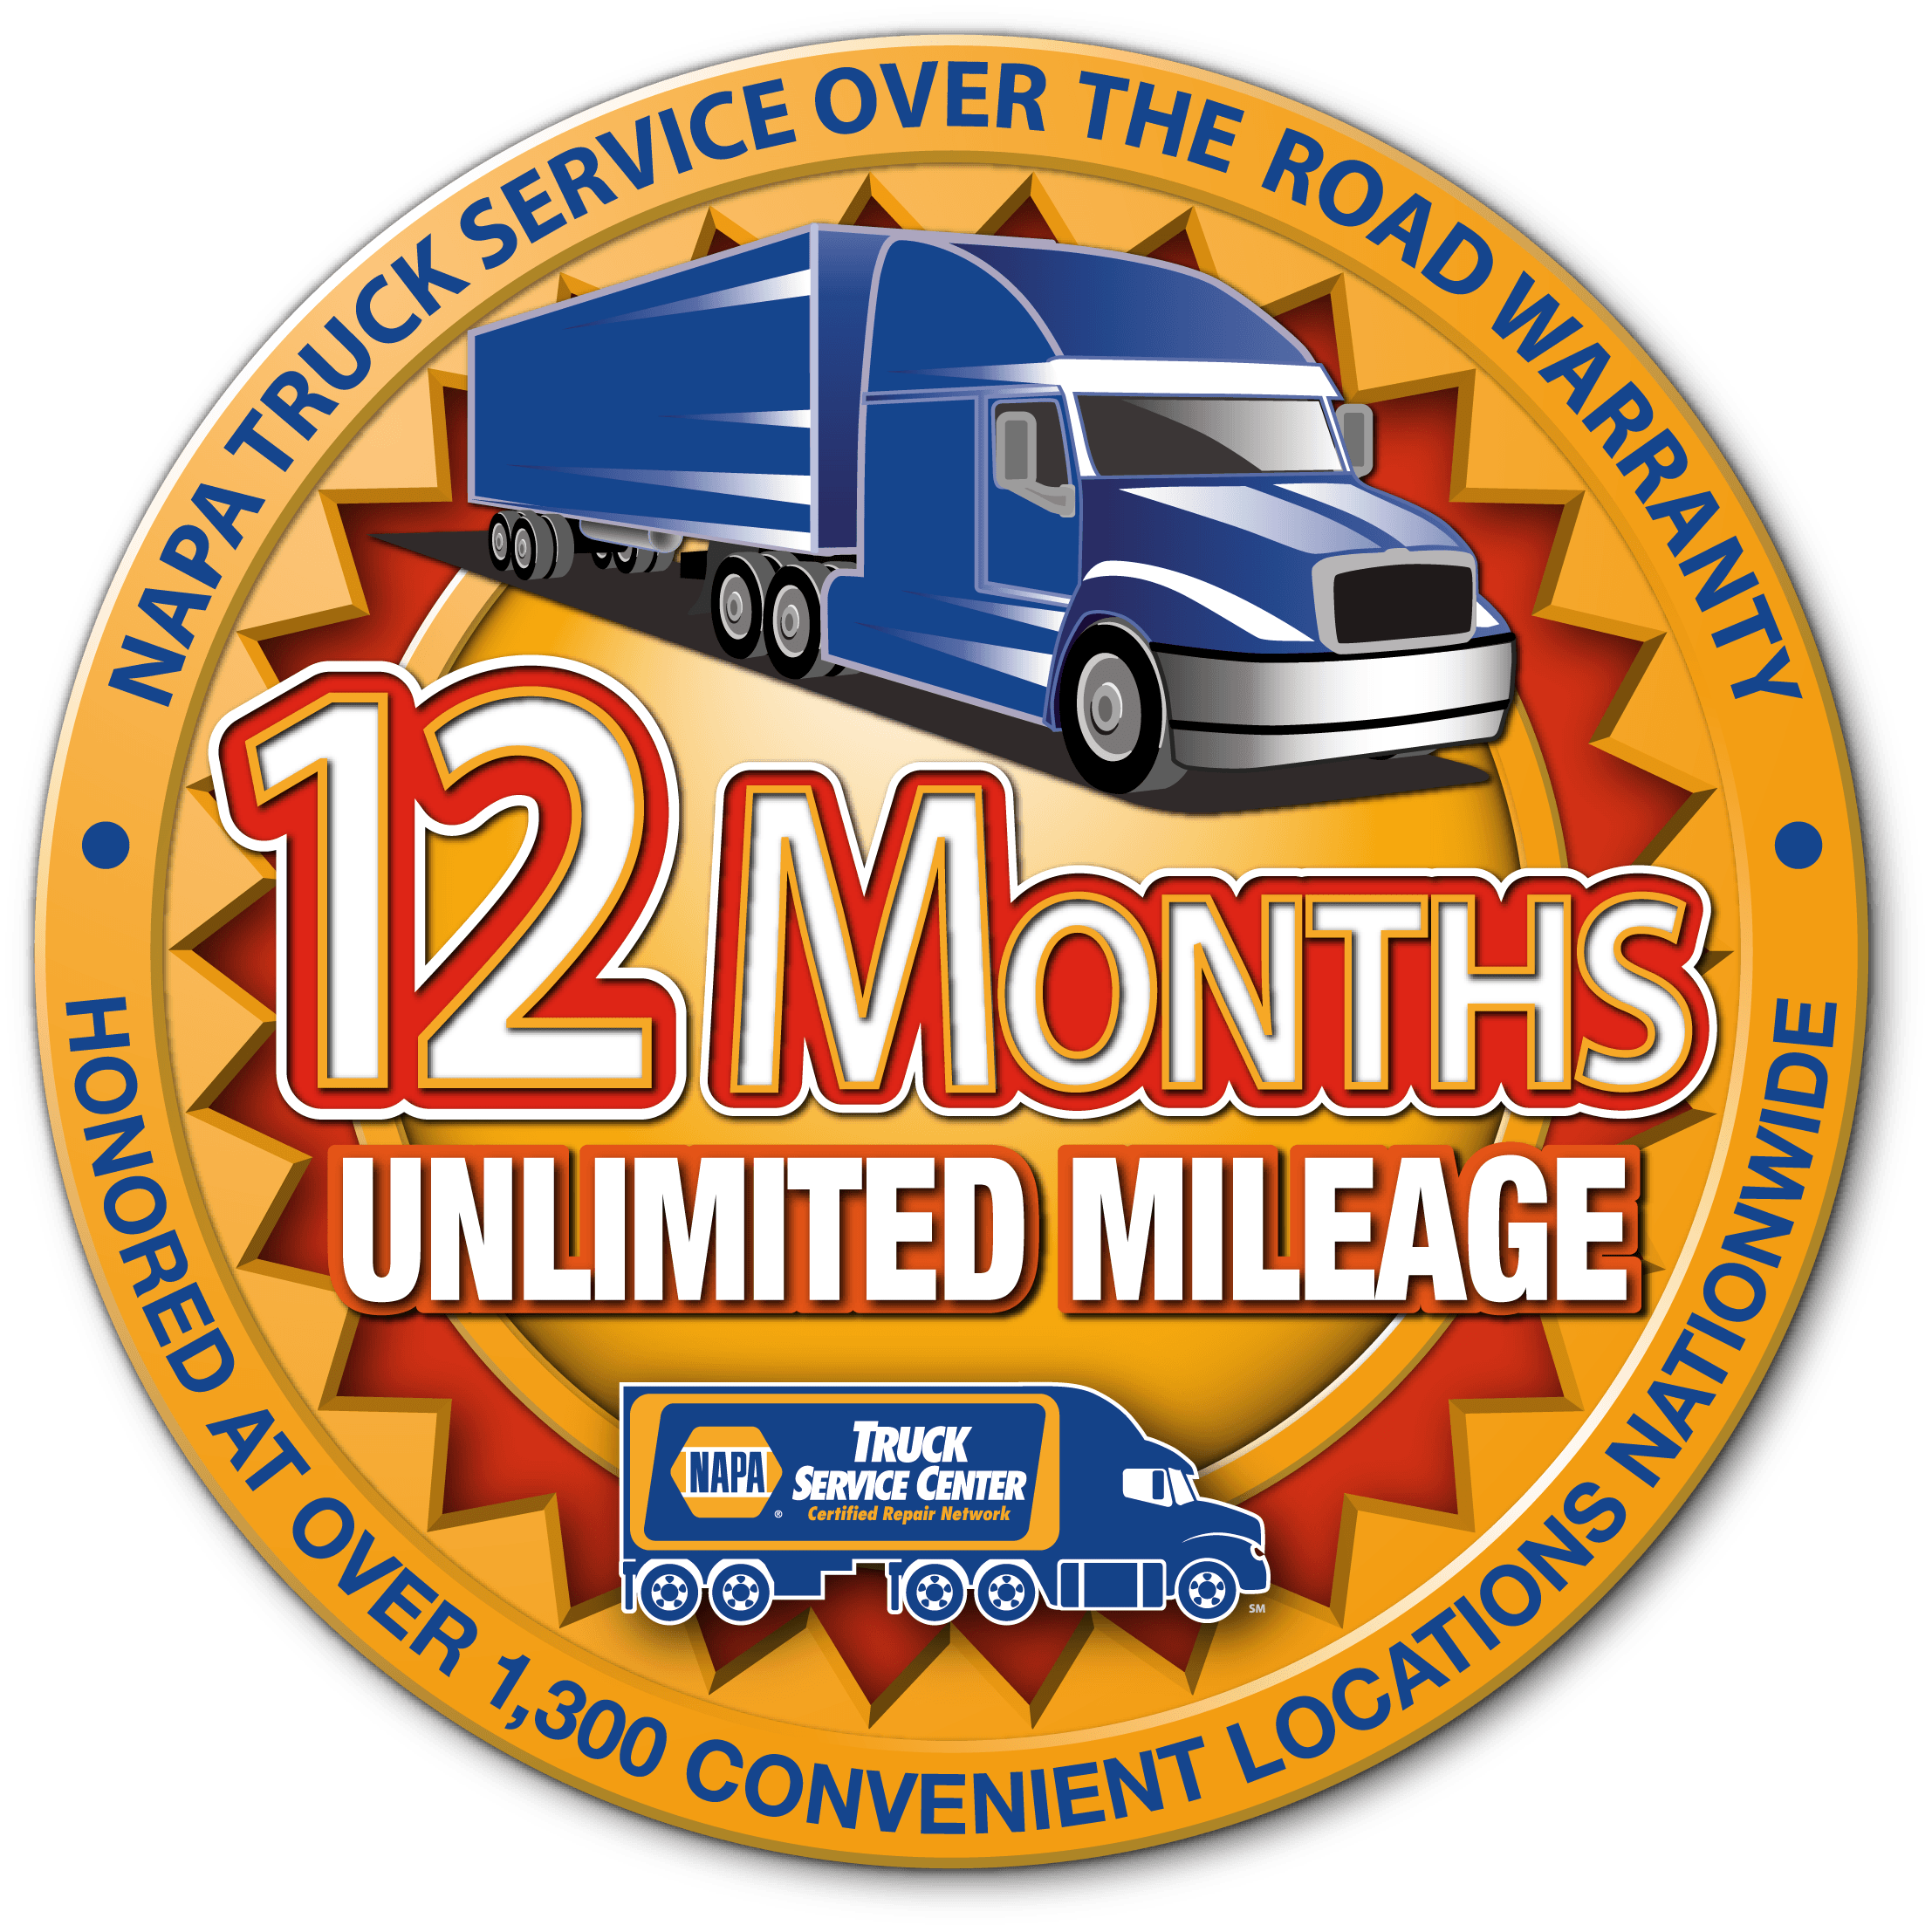 Automotive Service Center Logo - Warranty | NAPA HD Truck Service Center